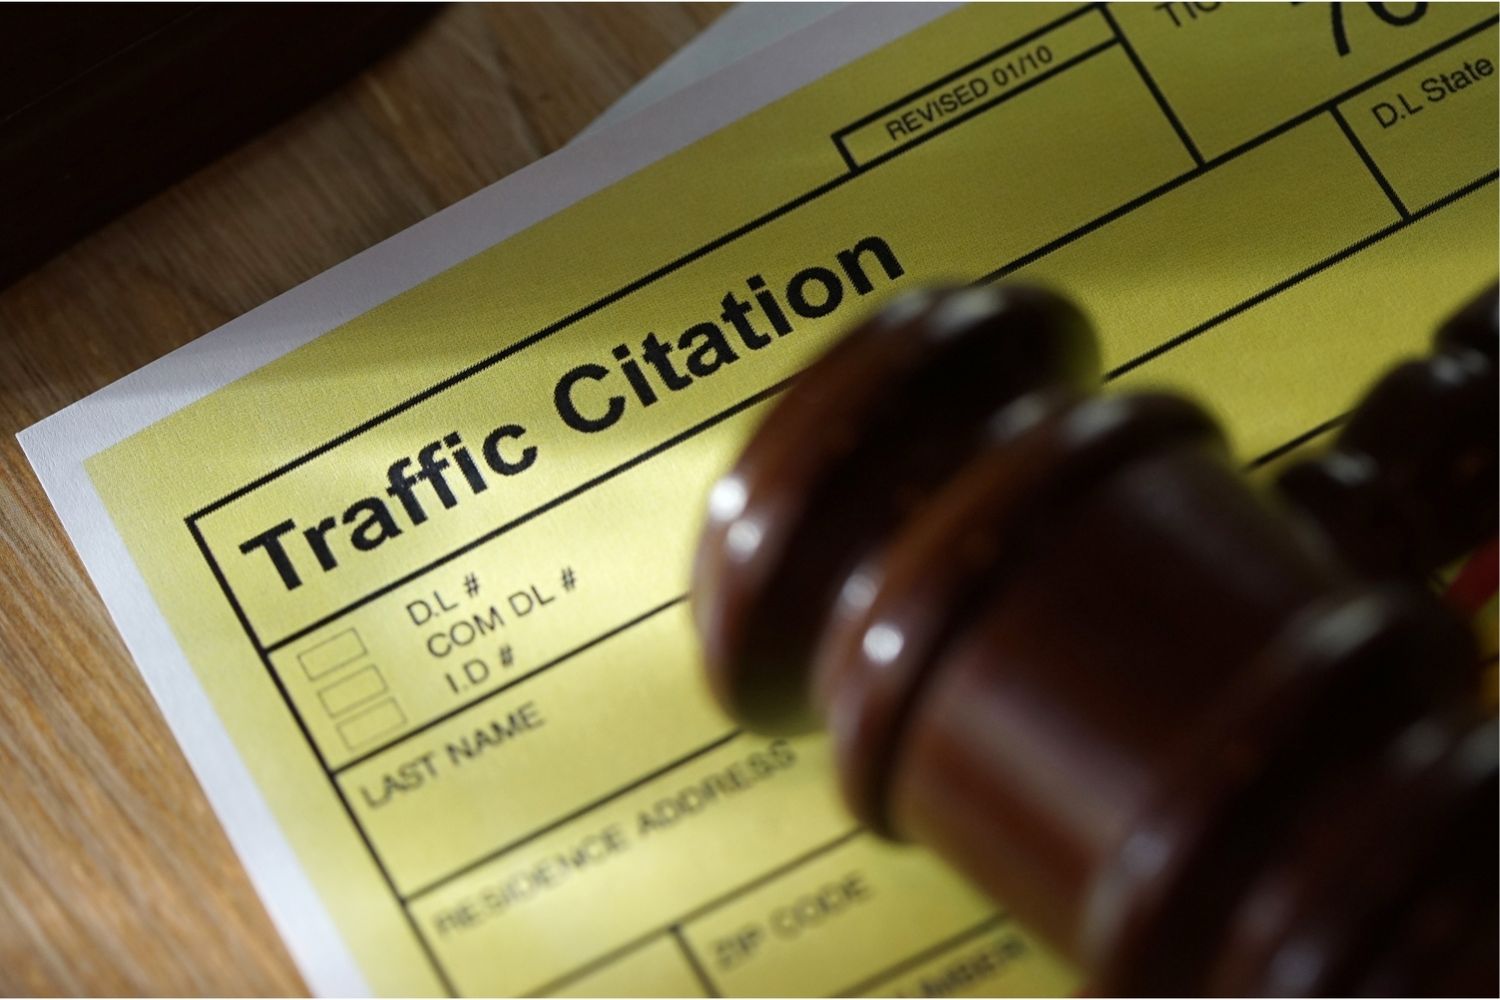 check traffic citation